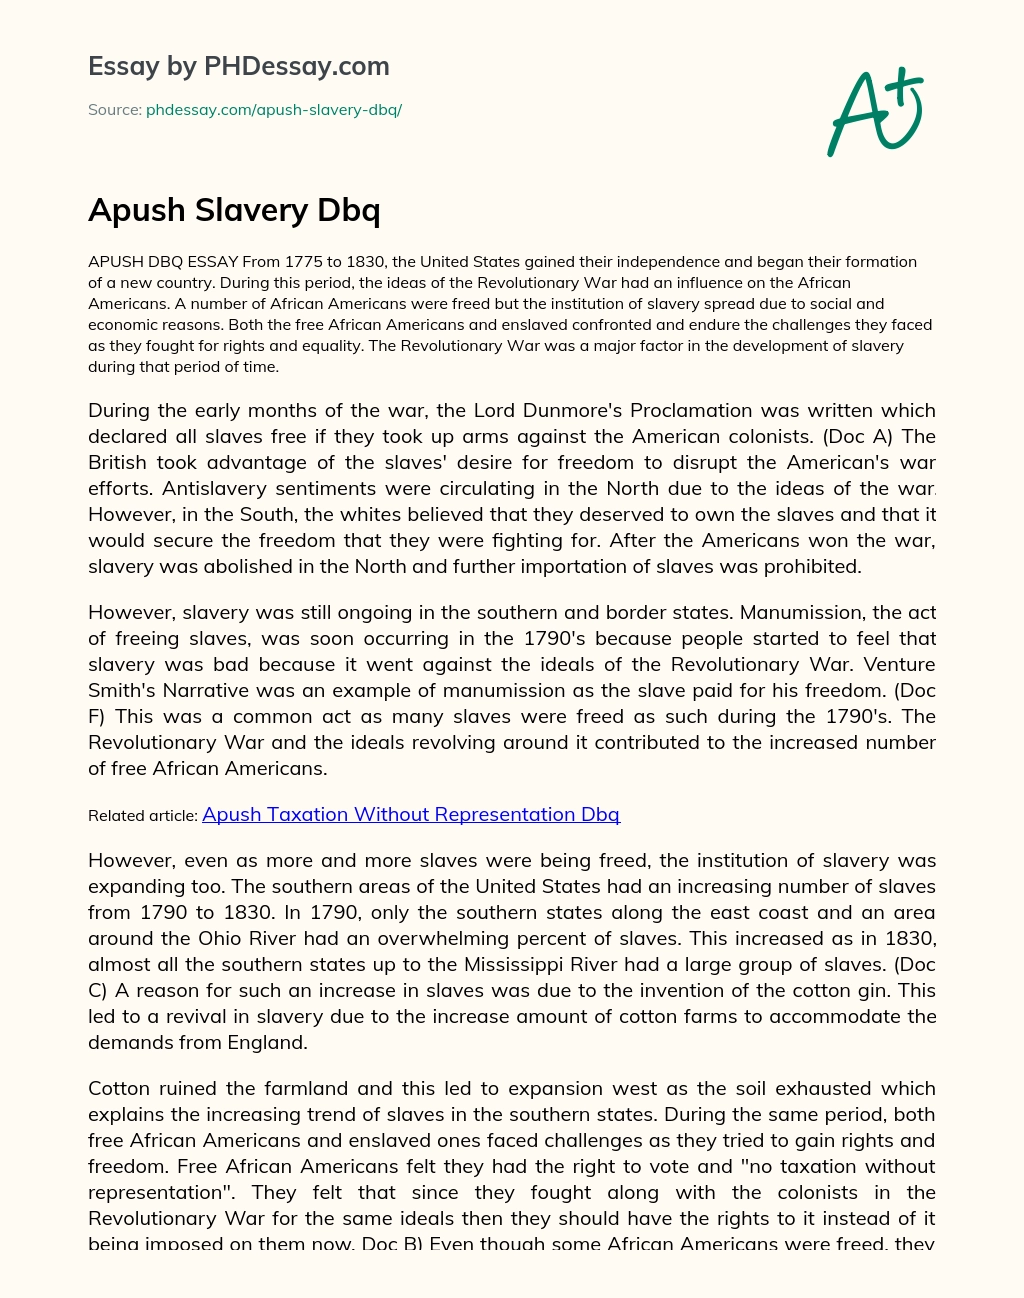 Apush Slavery Dbq essay